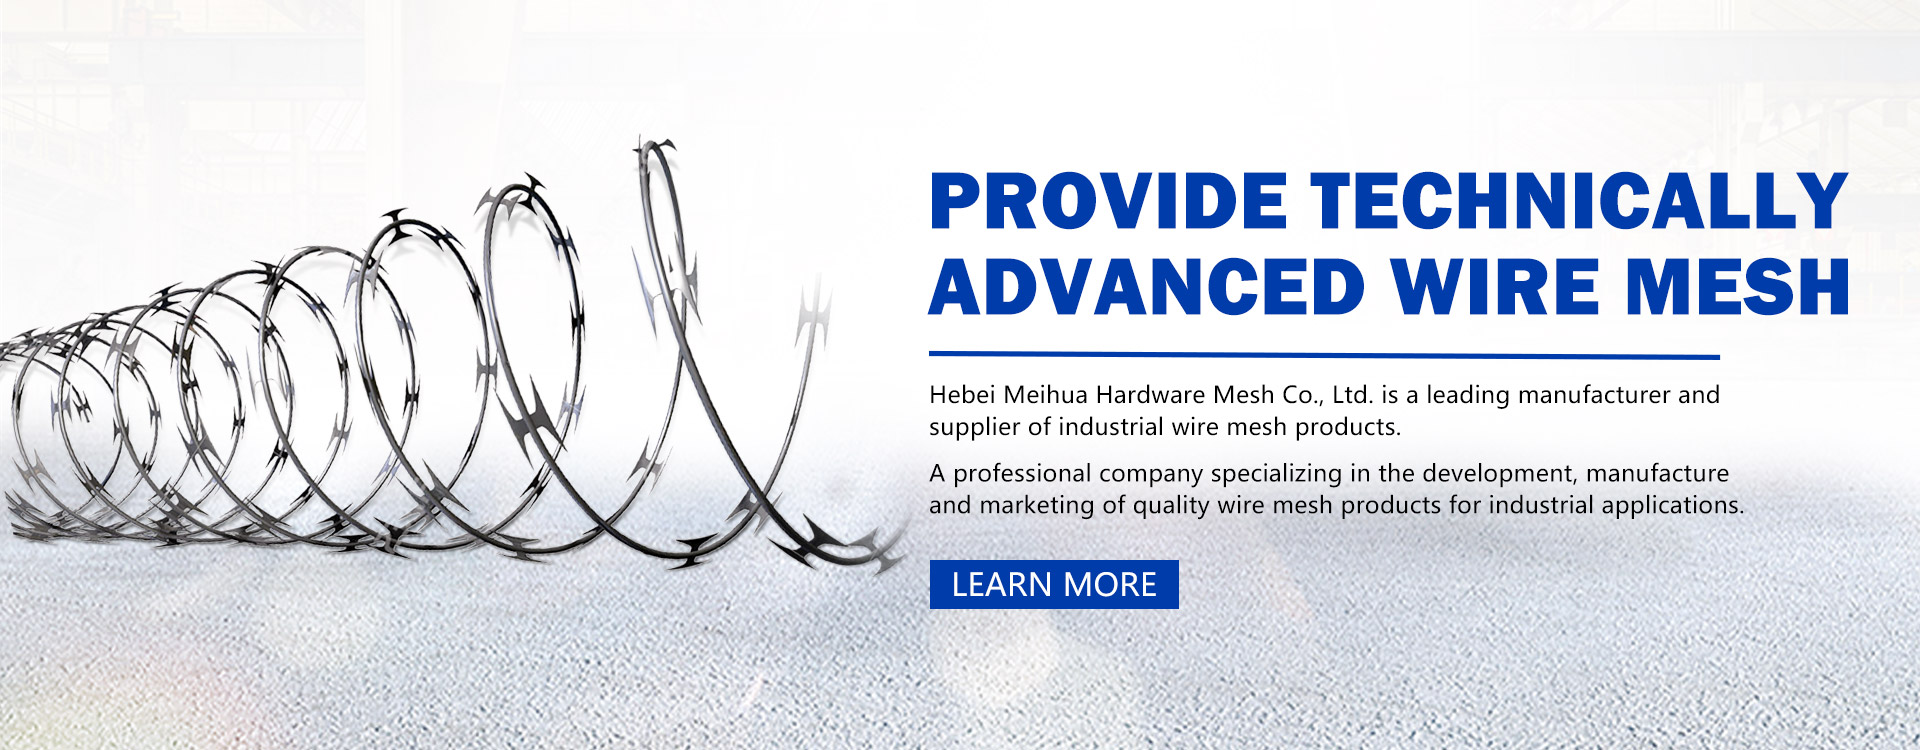 Hebei Meihua Hardware Mesh Co., Ltd.